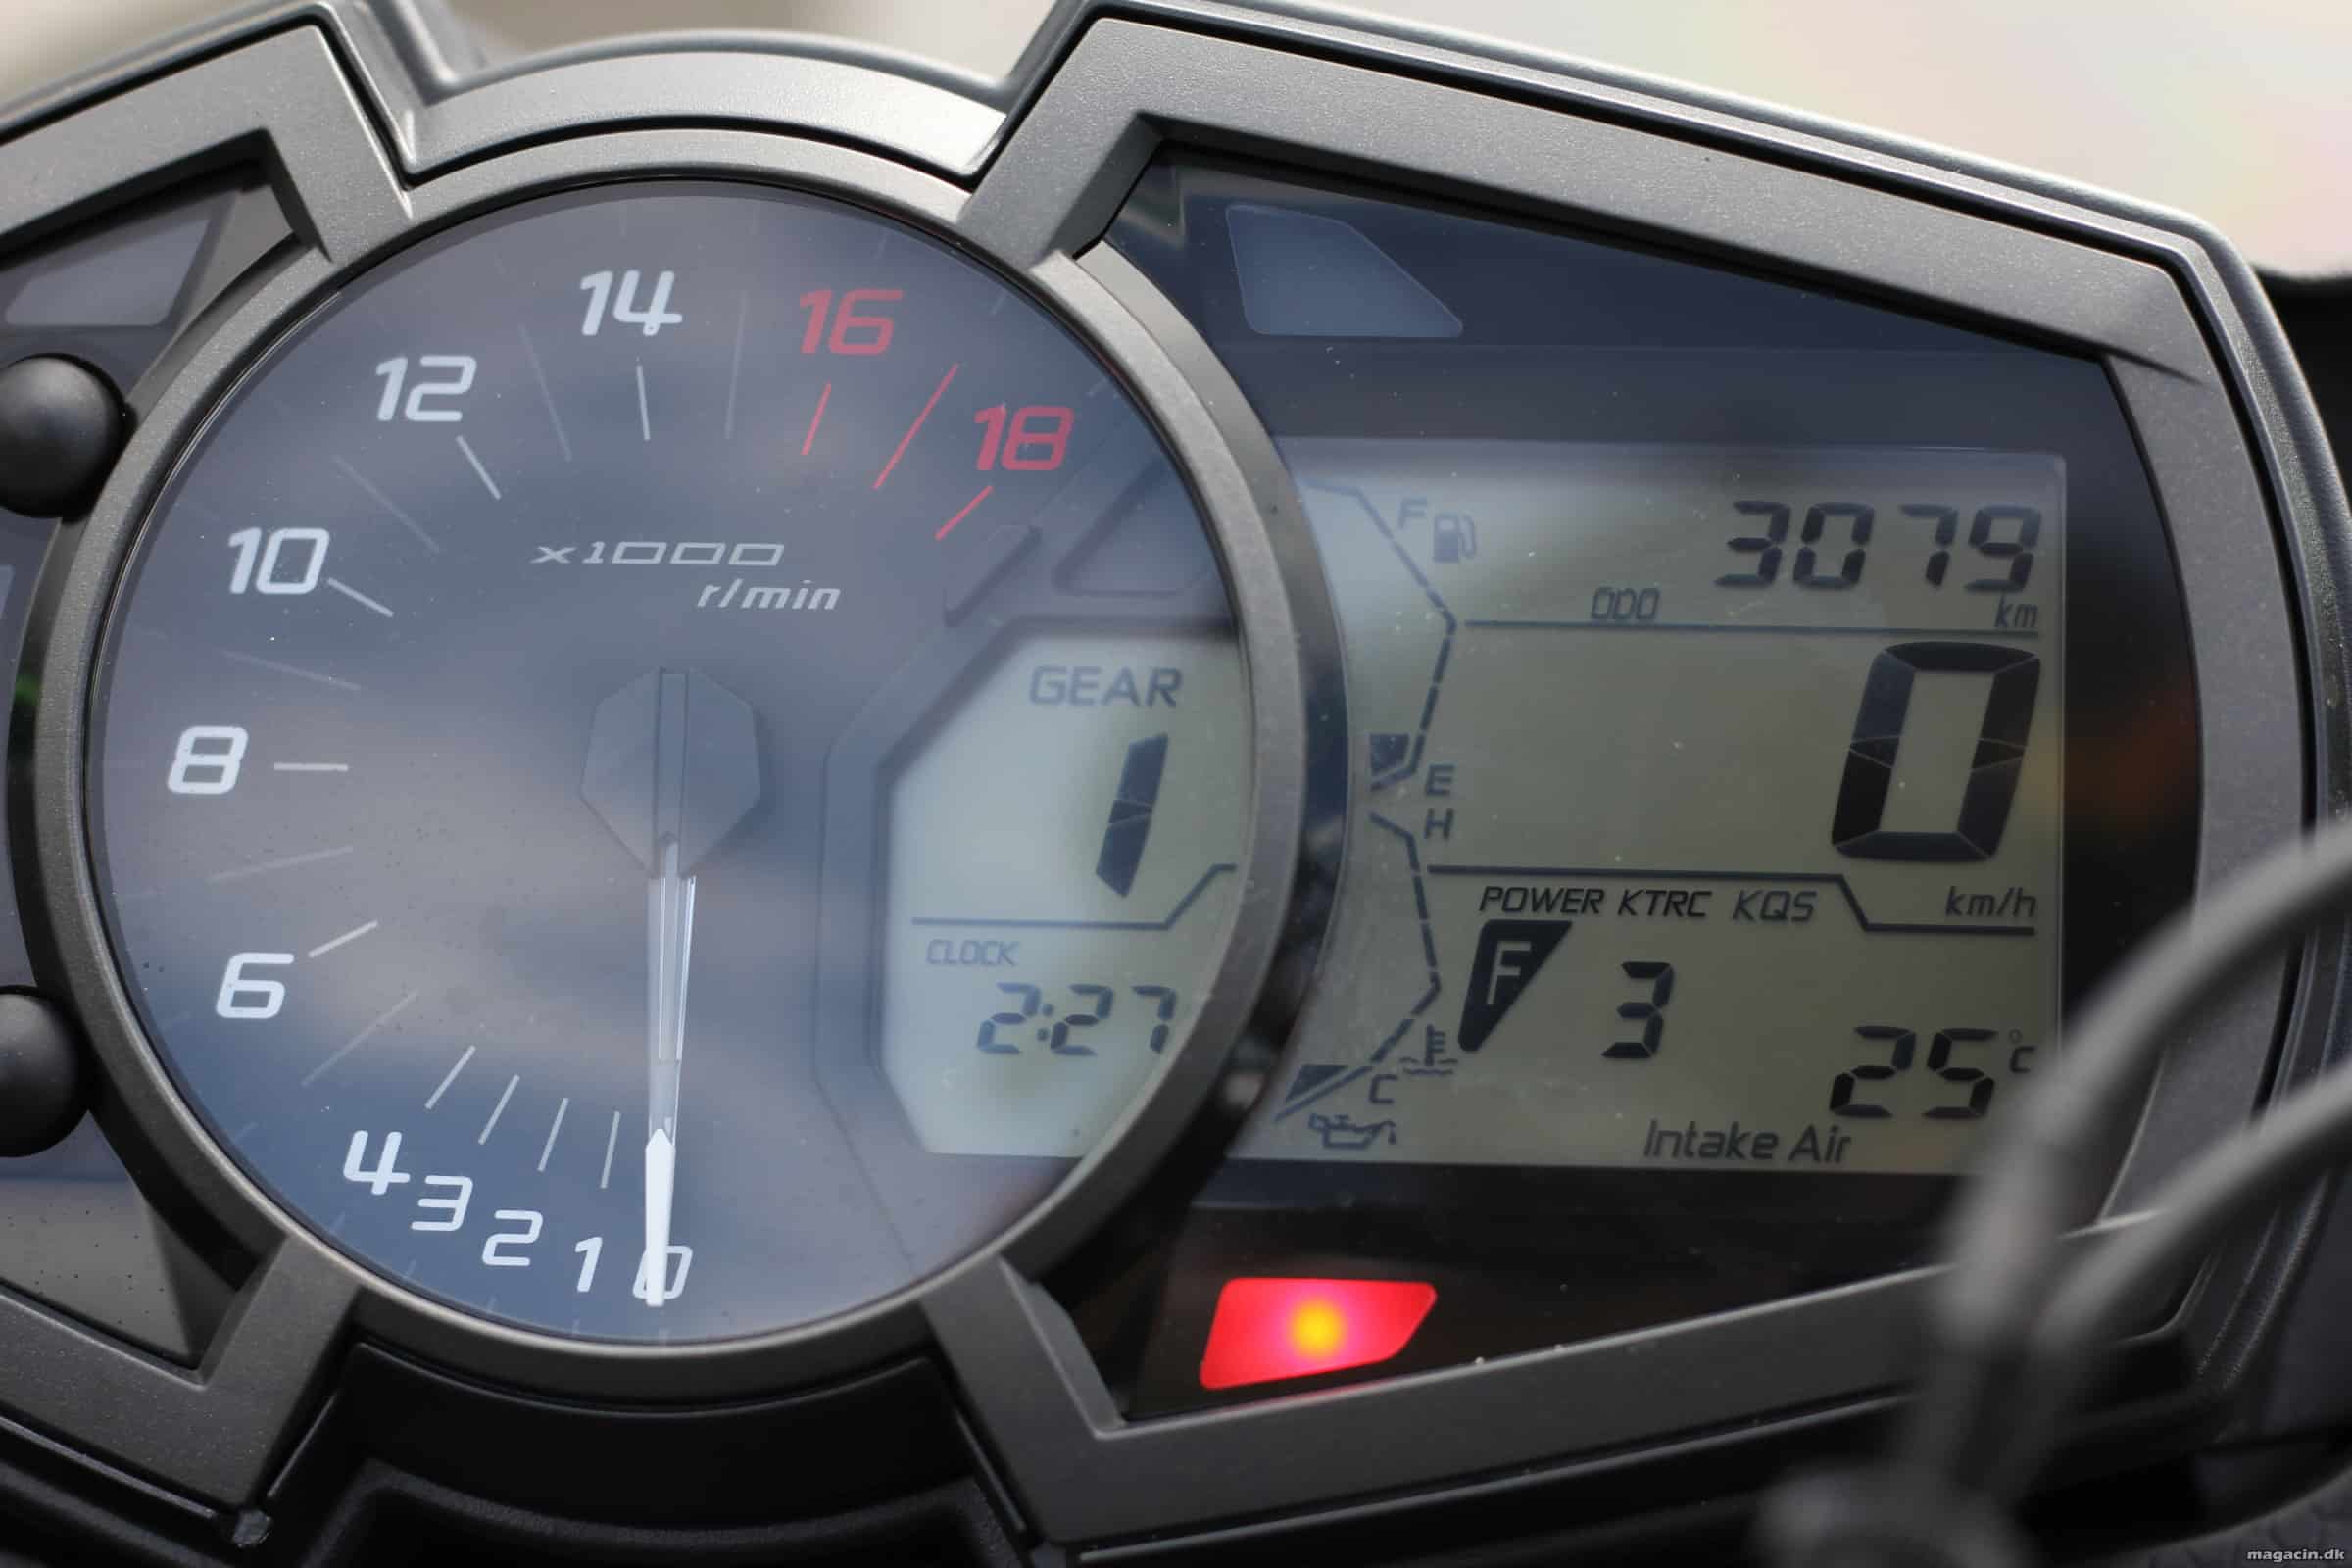 Test: 2019 Kawasaki ZX6R – Super værdi for pengene